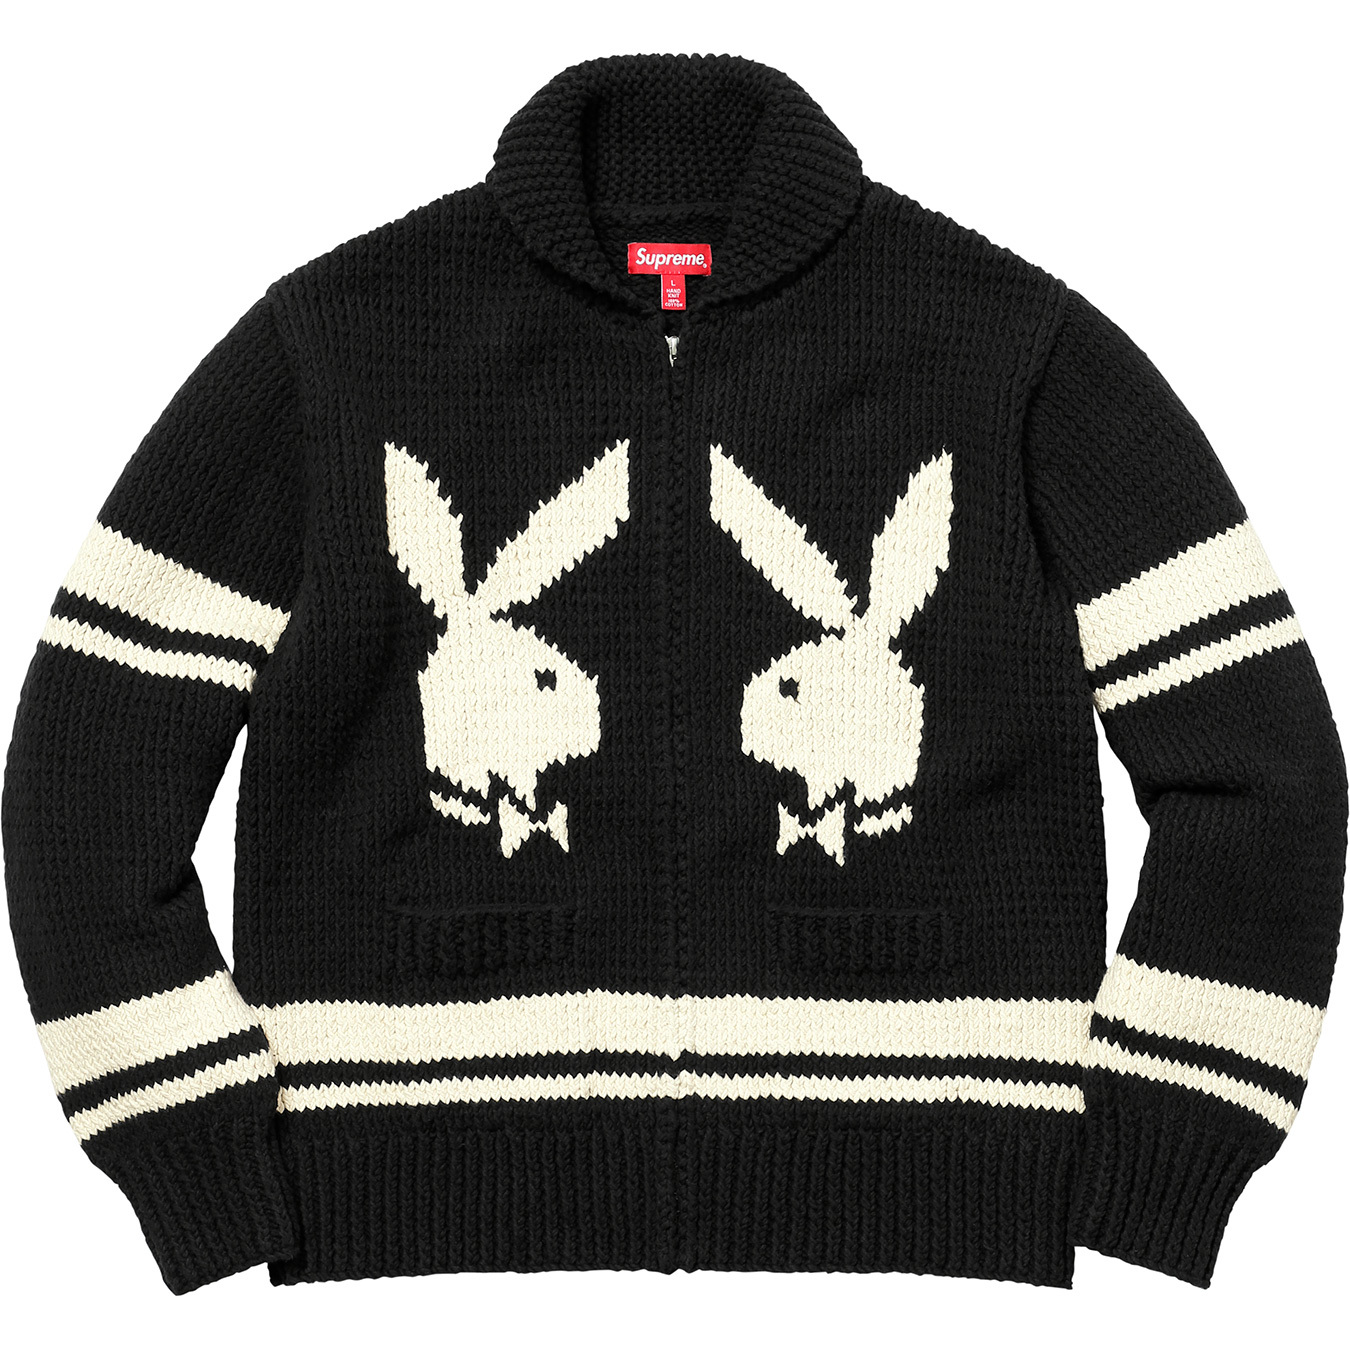 Supreme Playboy Shawl Collar Full Zip Sweater Black - FW17 - US